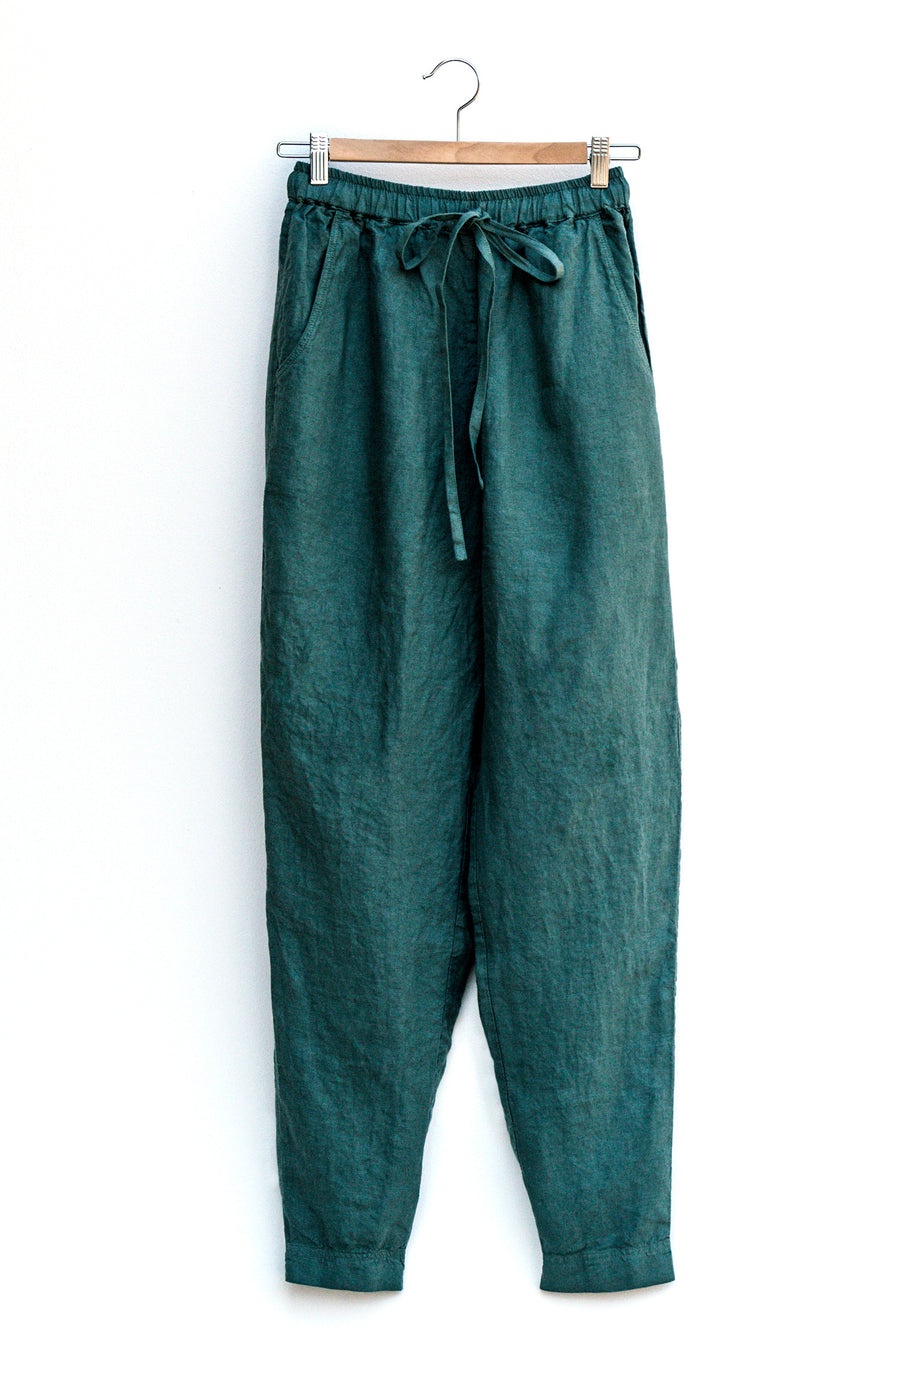 Comfortable airy pants in Sagebrush Green shade